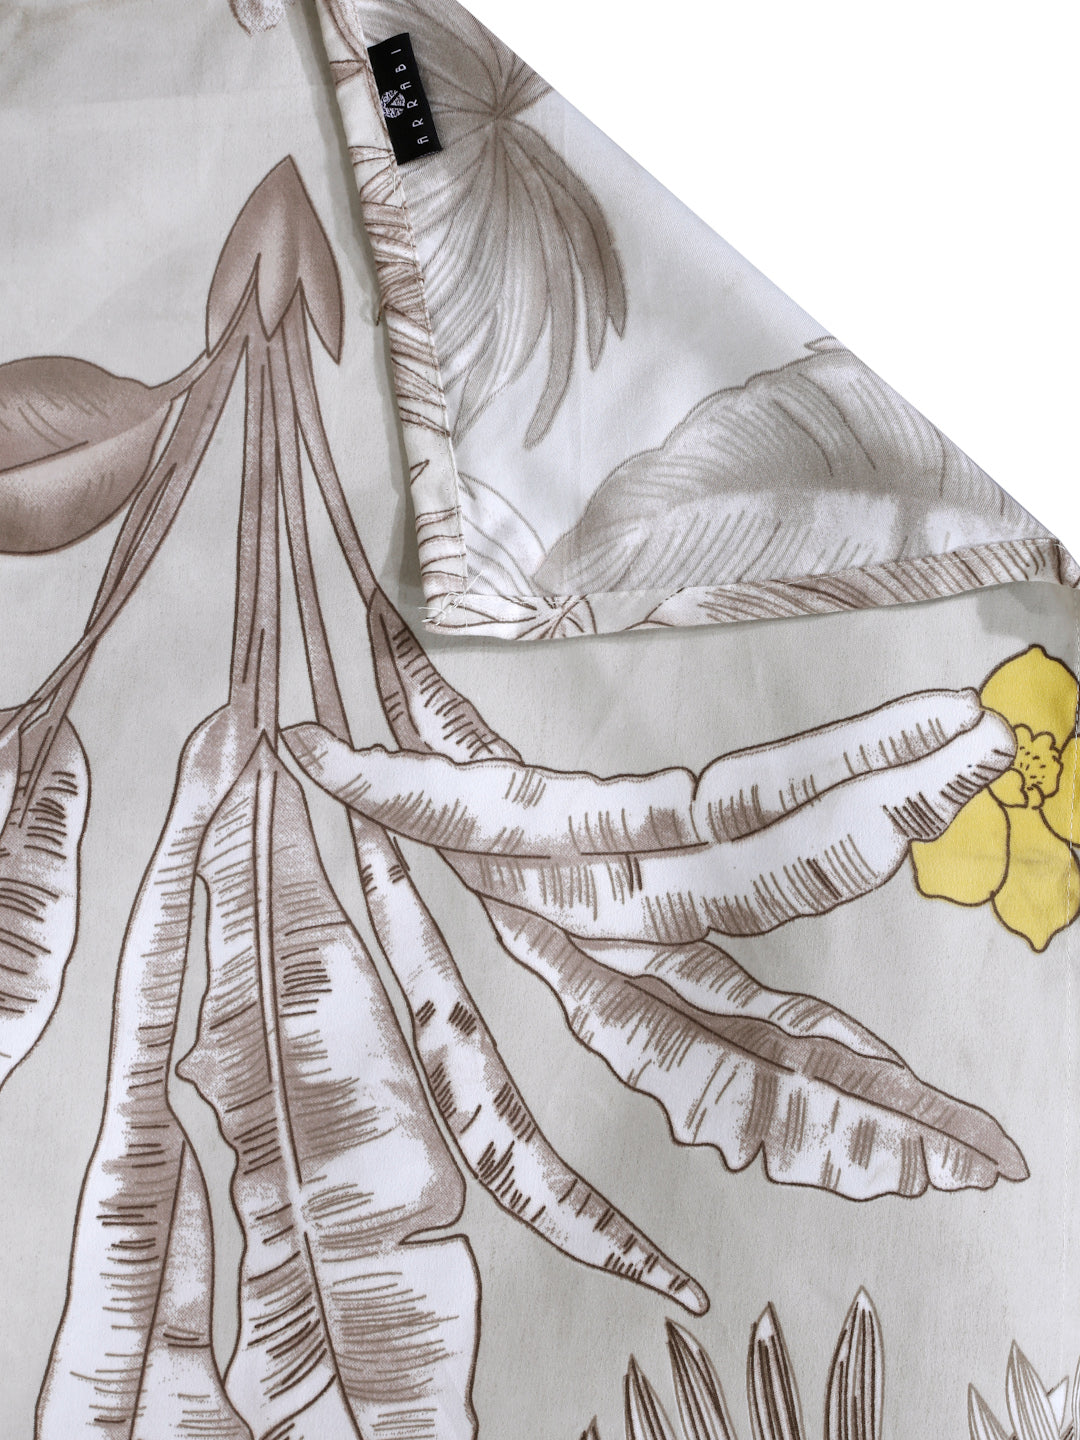 Arrabi Brown Leaf TC Cotton Blend Super King Size Bedsheet with 2 Pillow Covers (270 X 260 cm)